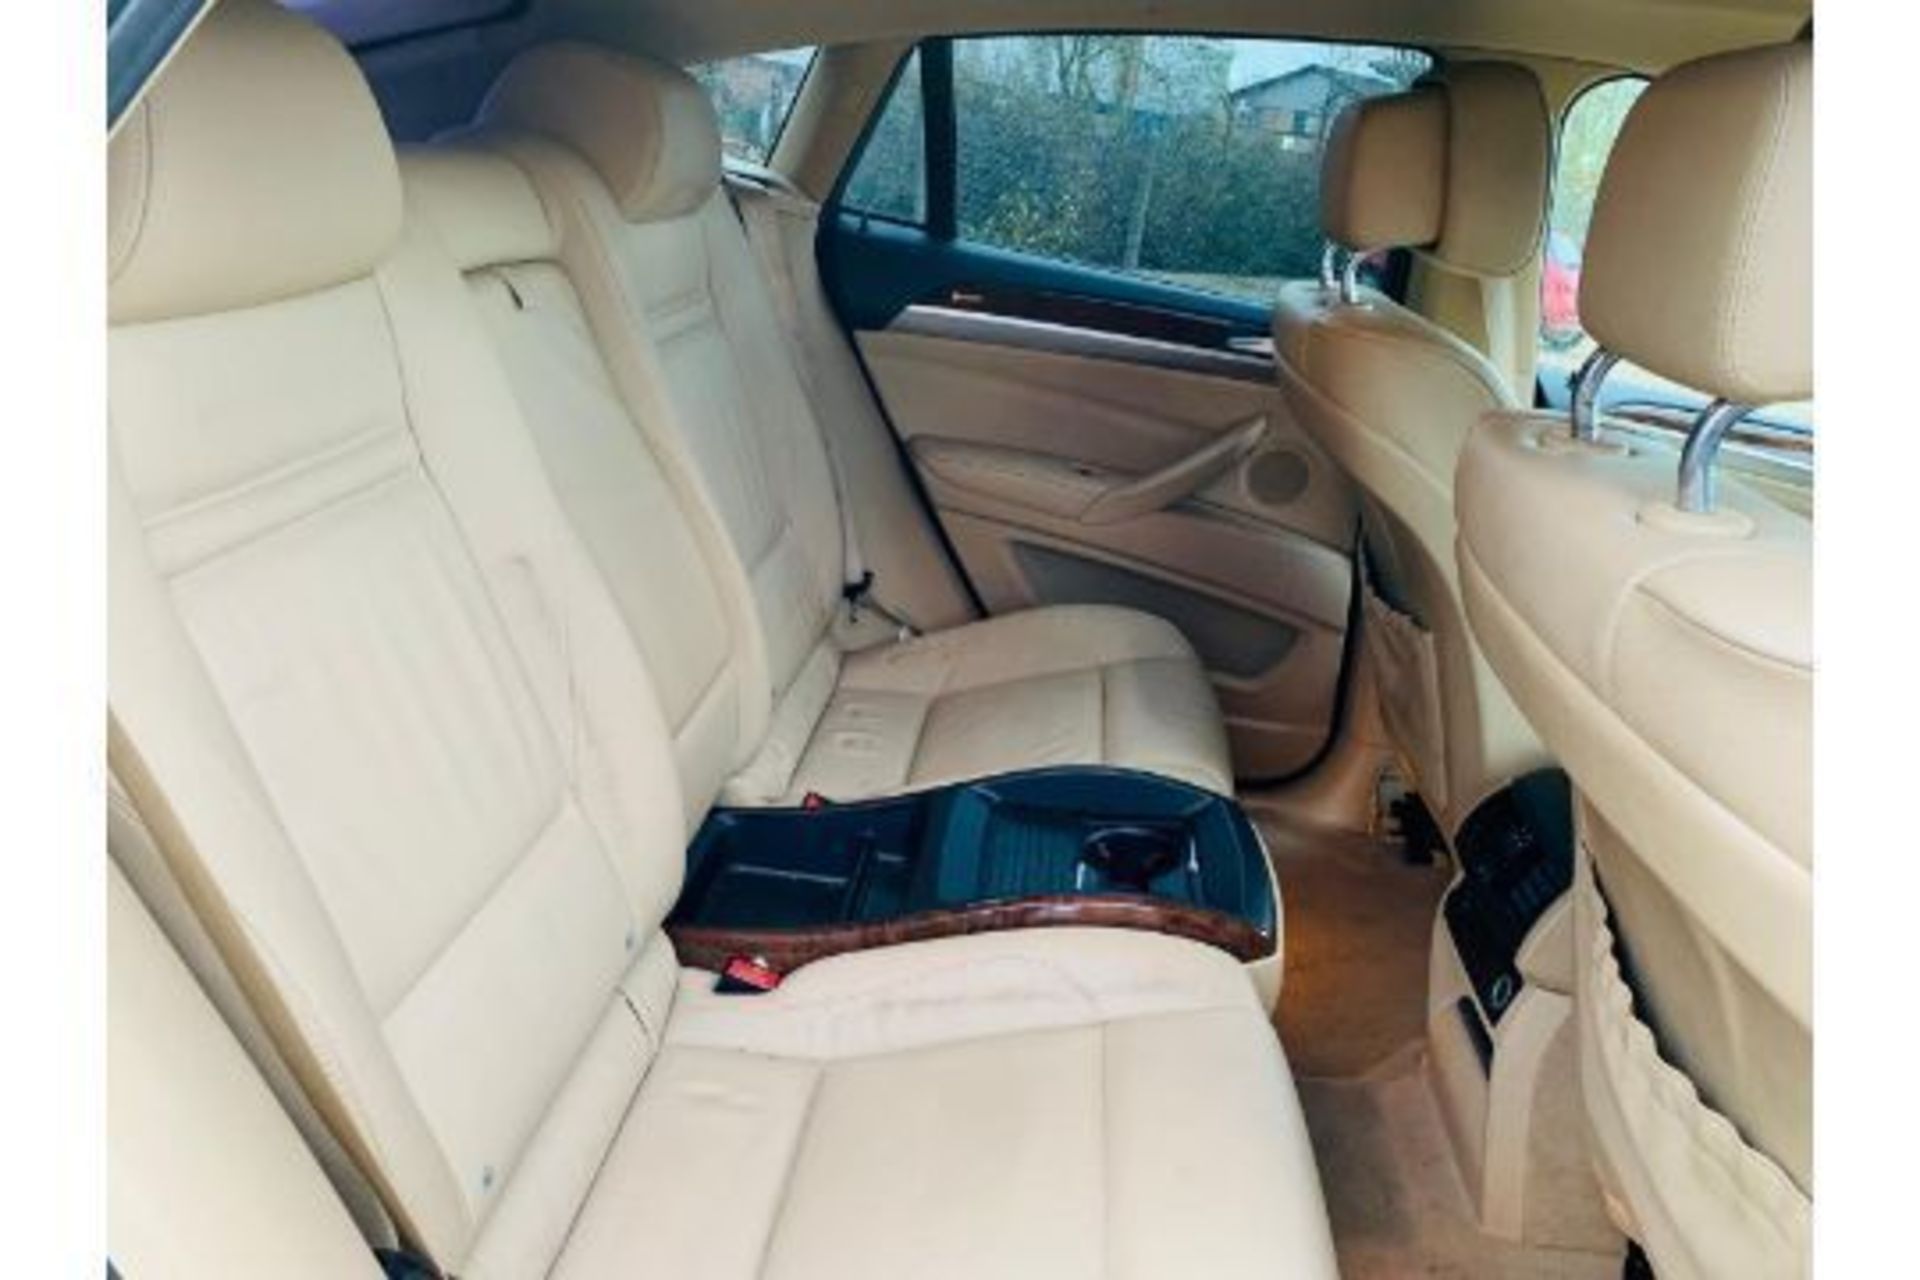 (RESERVE MET) BMW X6 xDrive 30d Auto - 2014 Reg - Leather Interior -Parking Sensors - Reversing Cam - Image 19 of 29